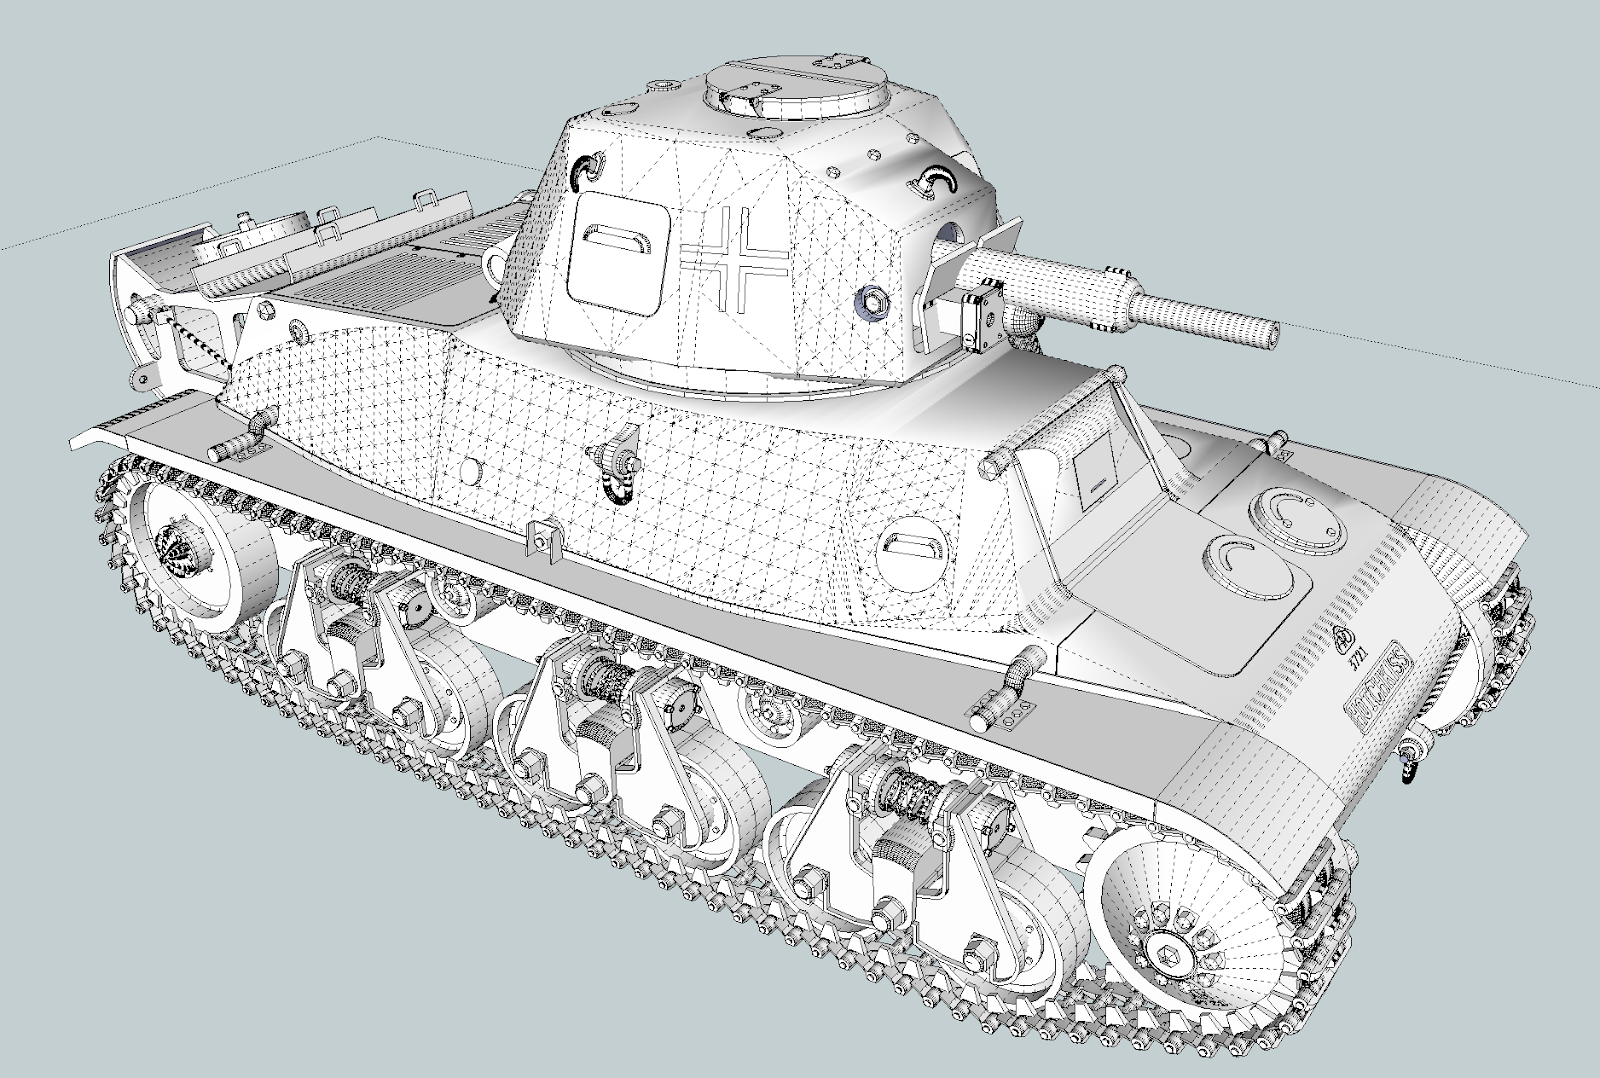 Vkj. Танк Гочкис н39. Renault r35 танк чертеж. Танк Гочкис н39 чертежи. Hotchkiss h35 (h38 h39).